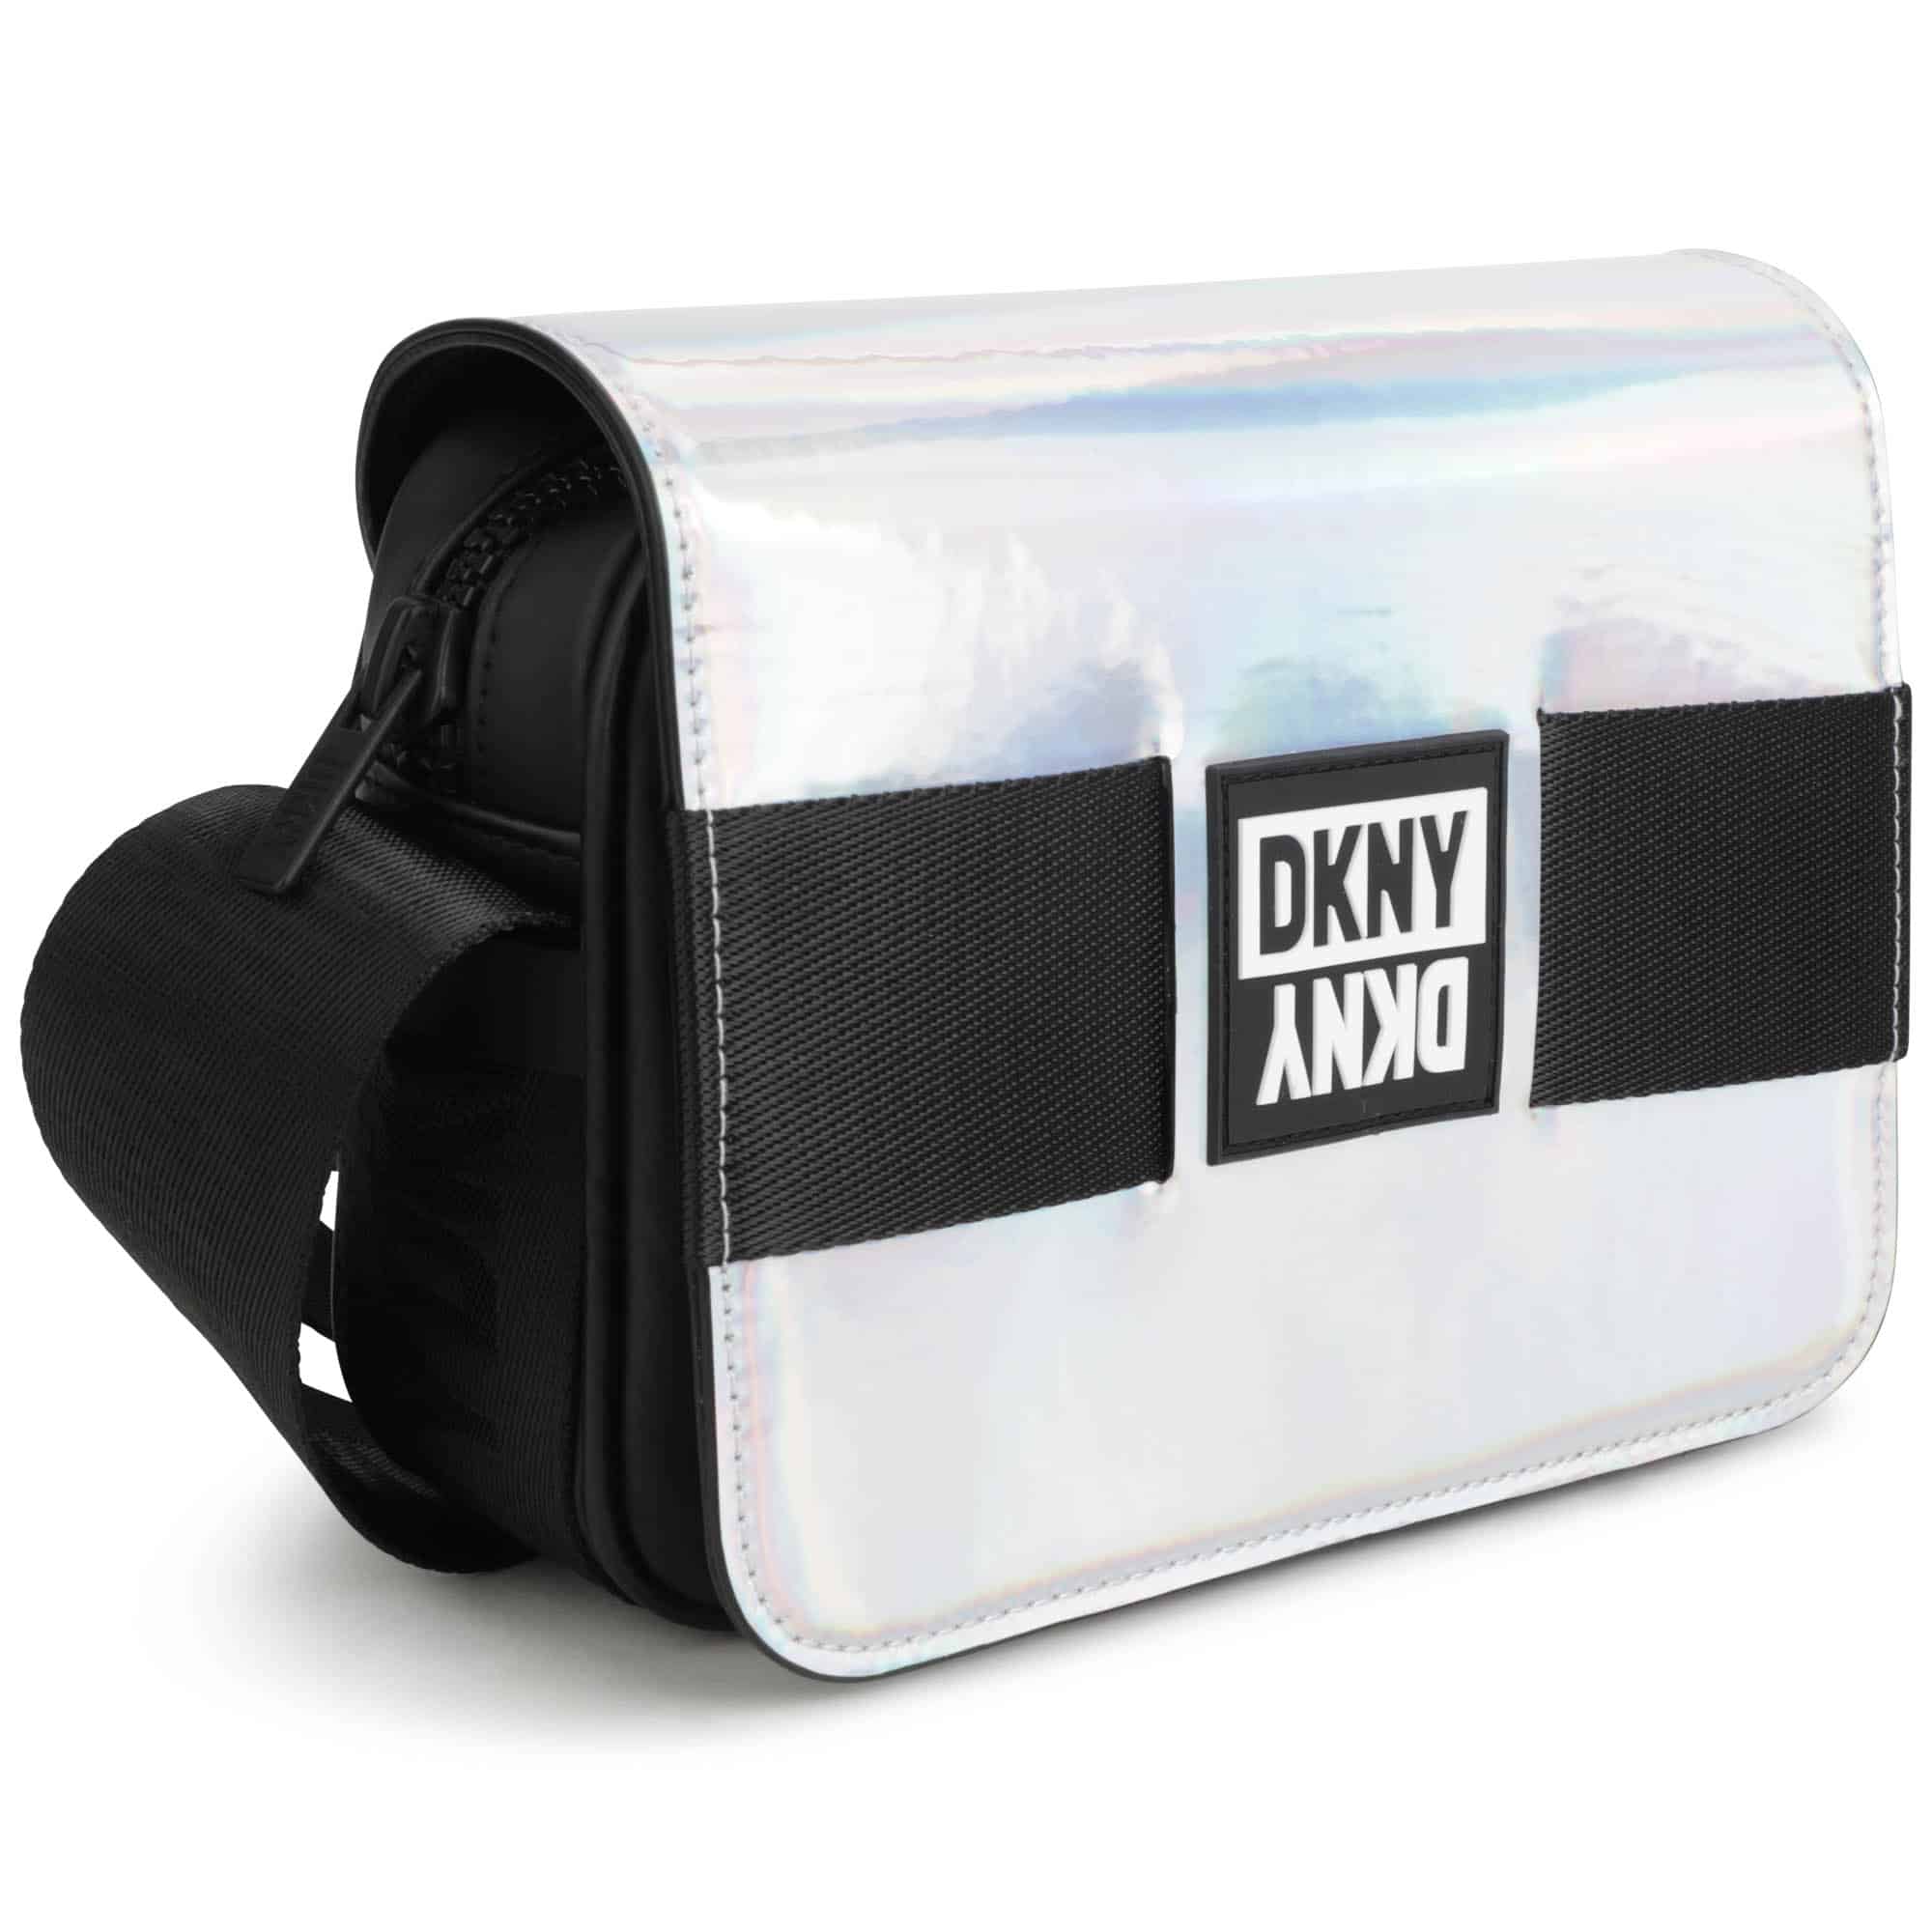 DKNY girls silver handbag with white logo side view